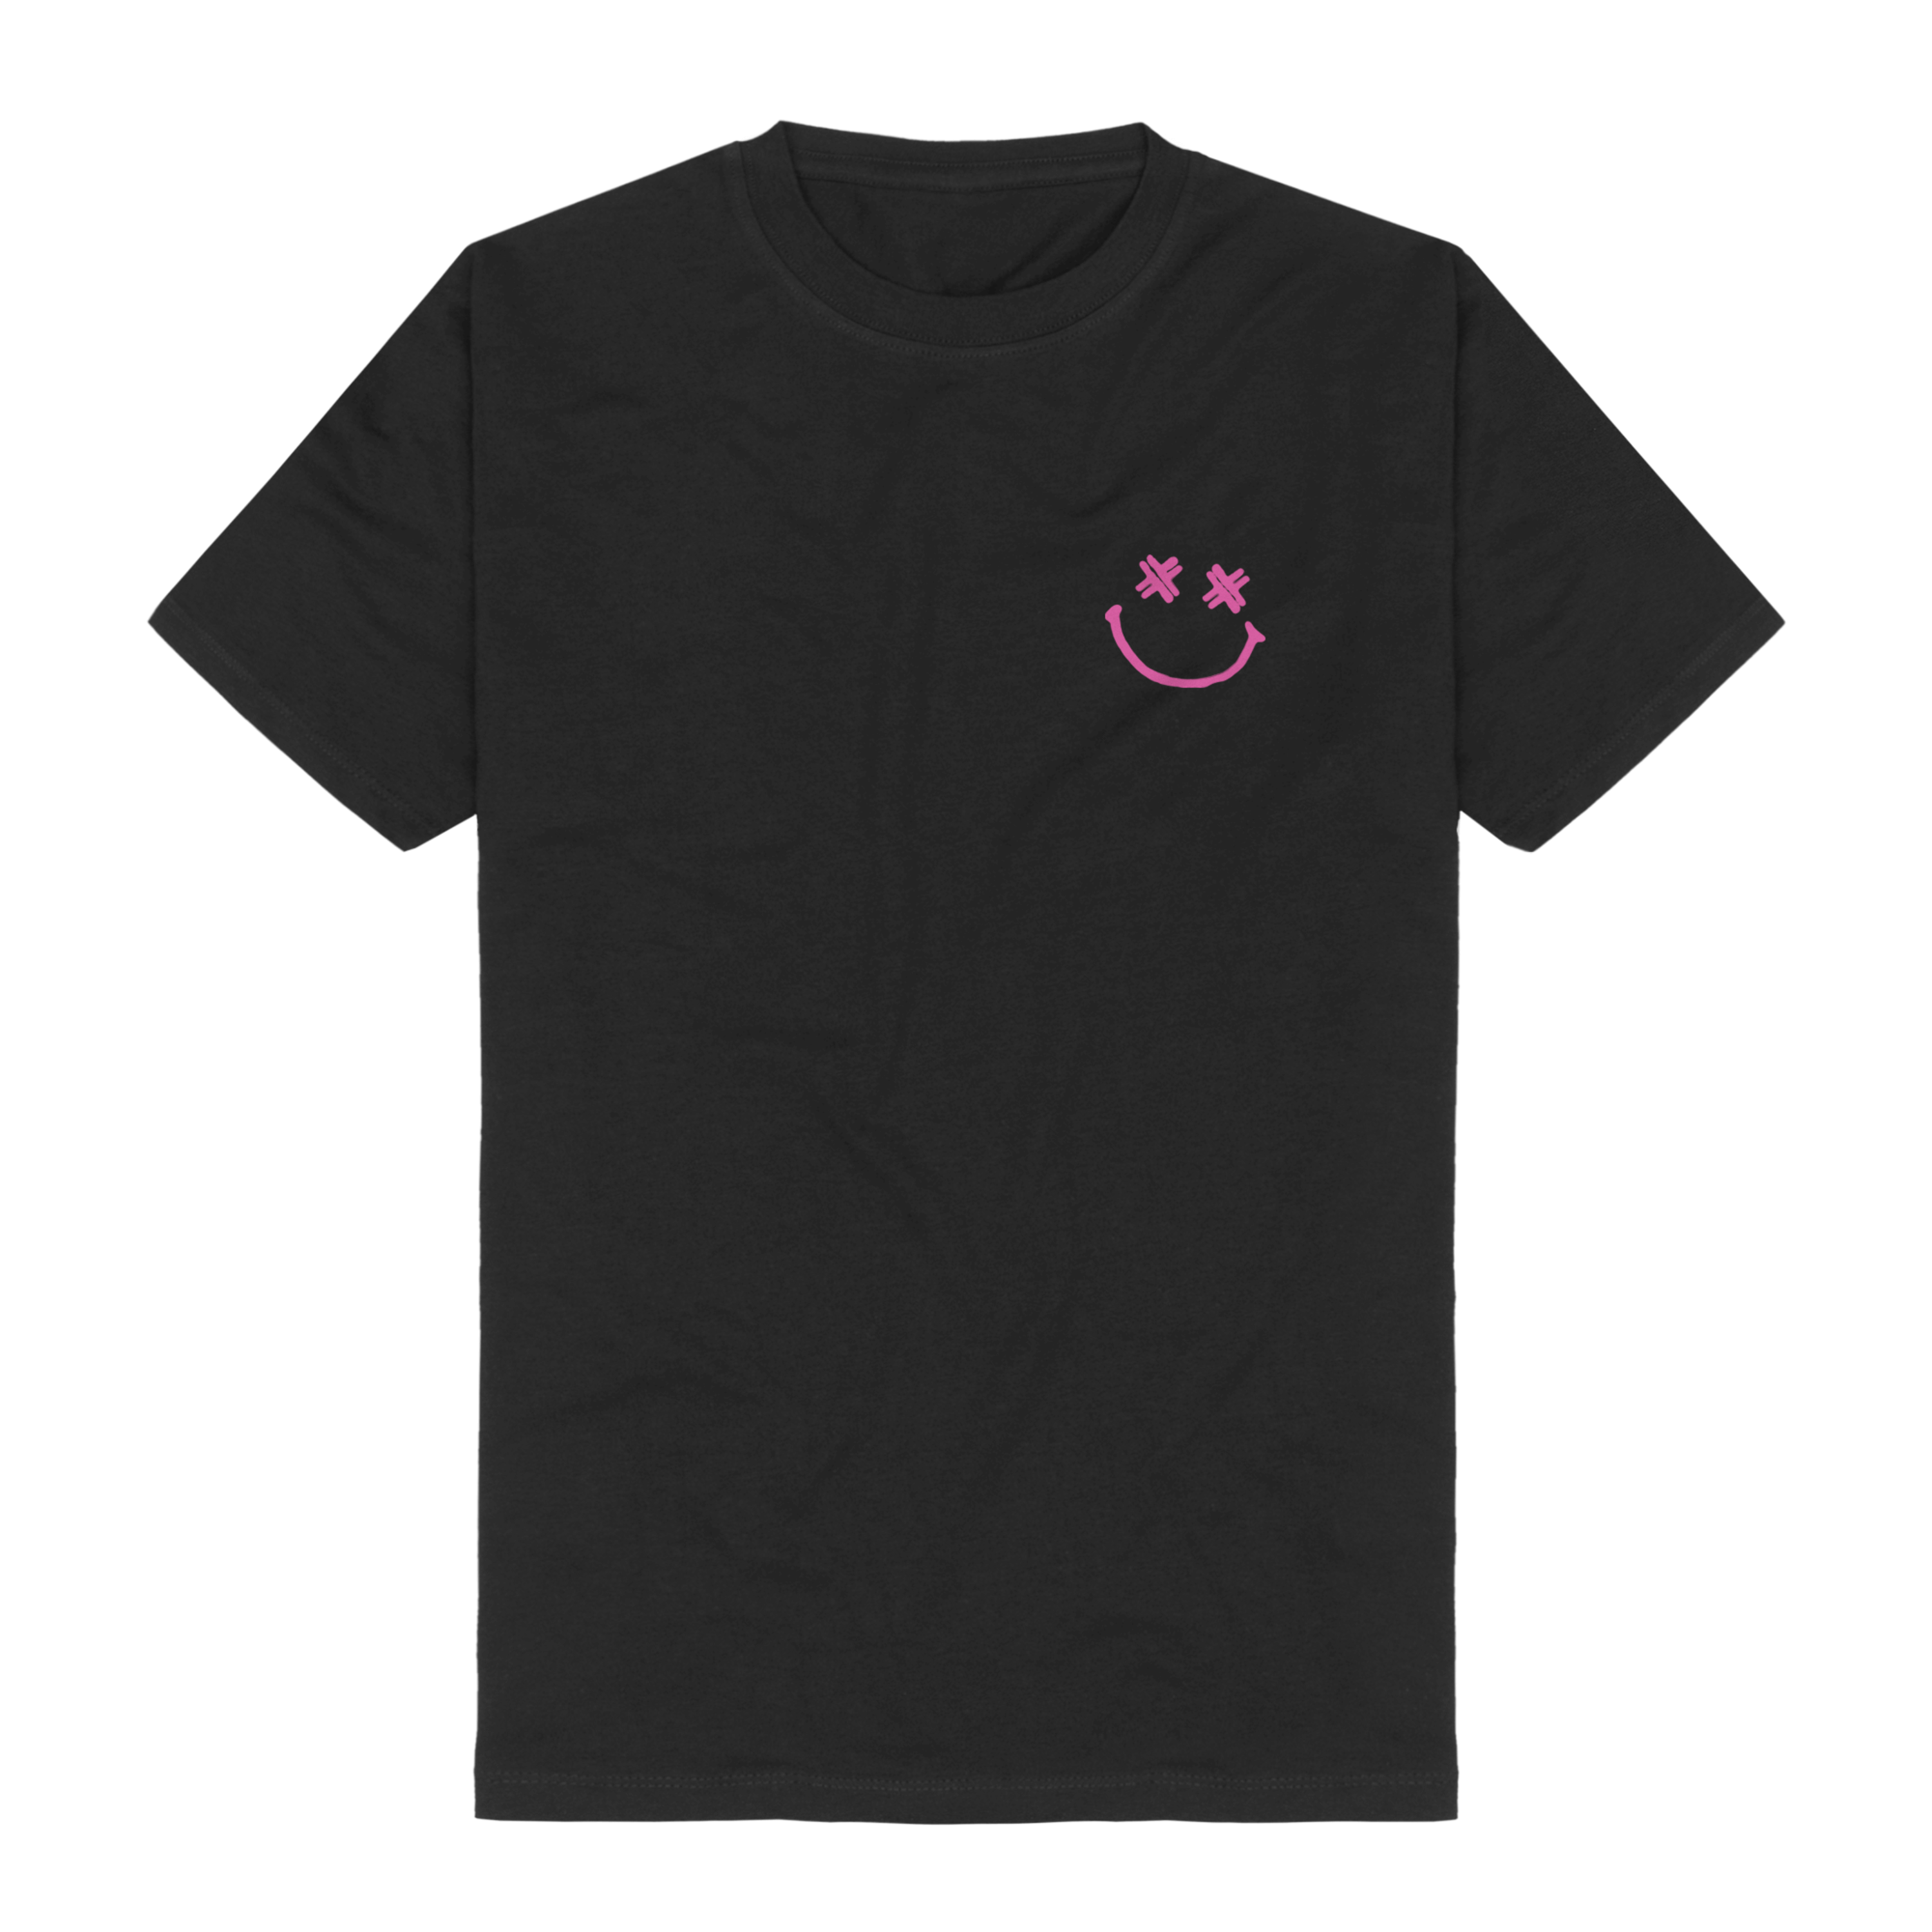 Electric Callboy - Fuckboi Smile T-Shirt